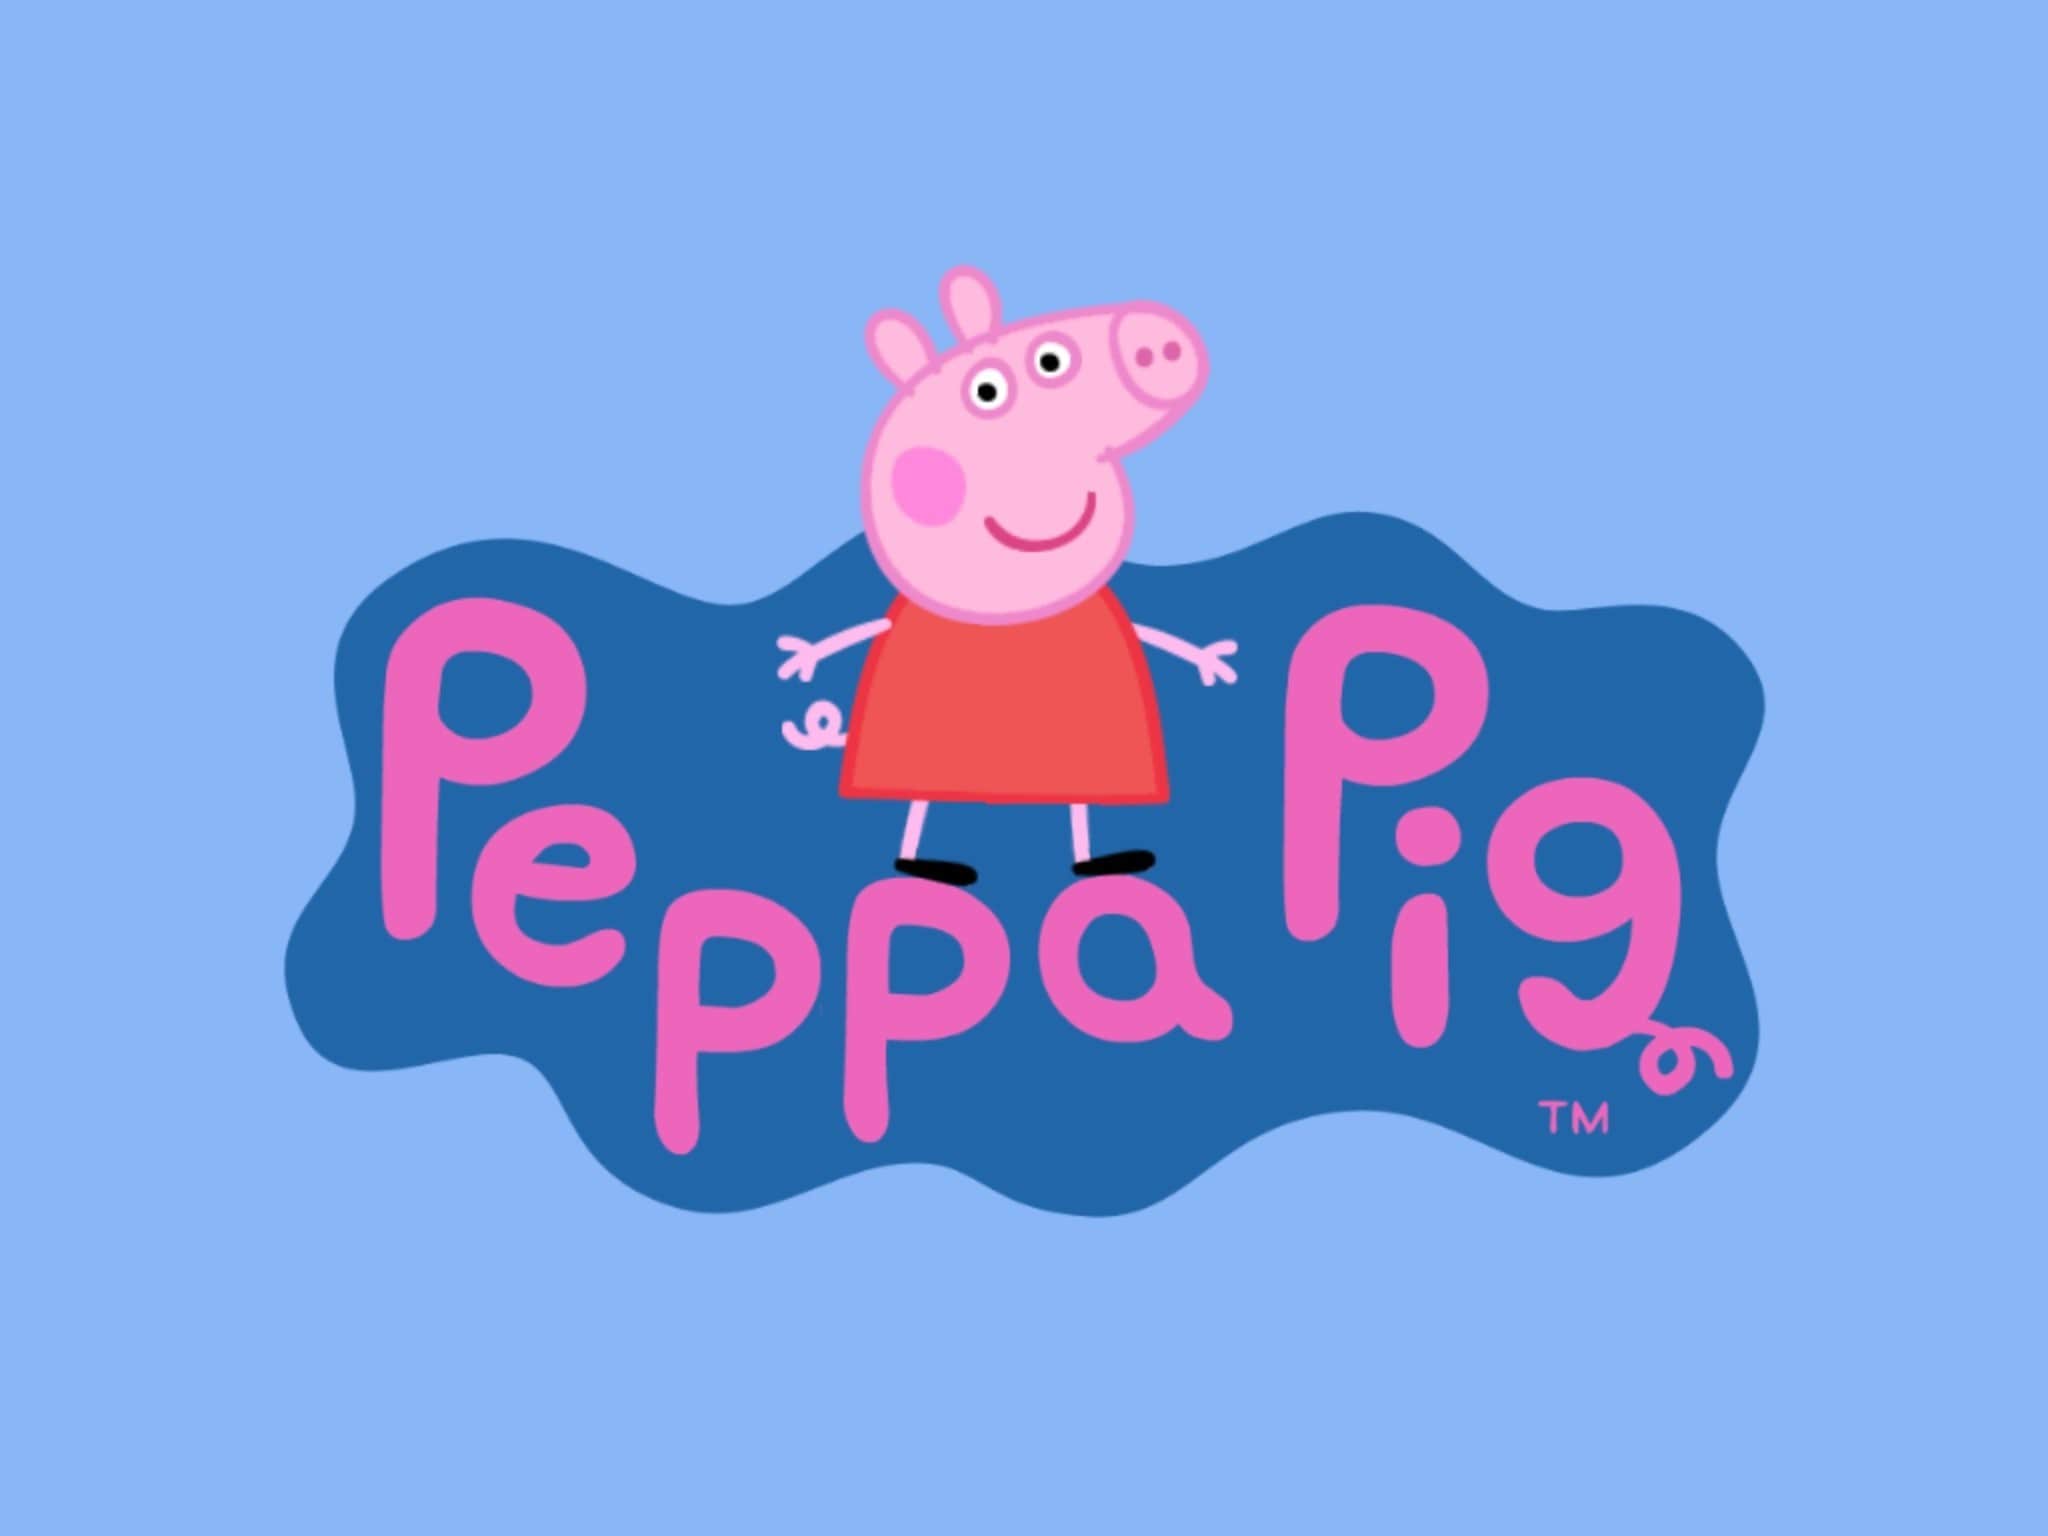 Peppa Pig Wallpaper 4k free download